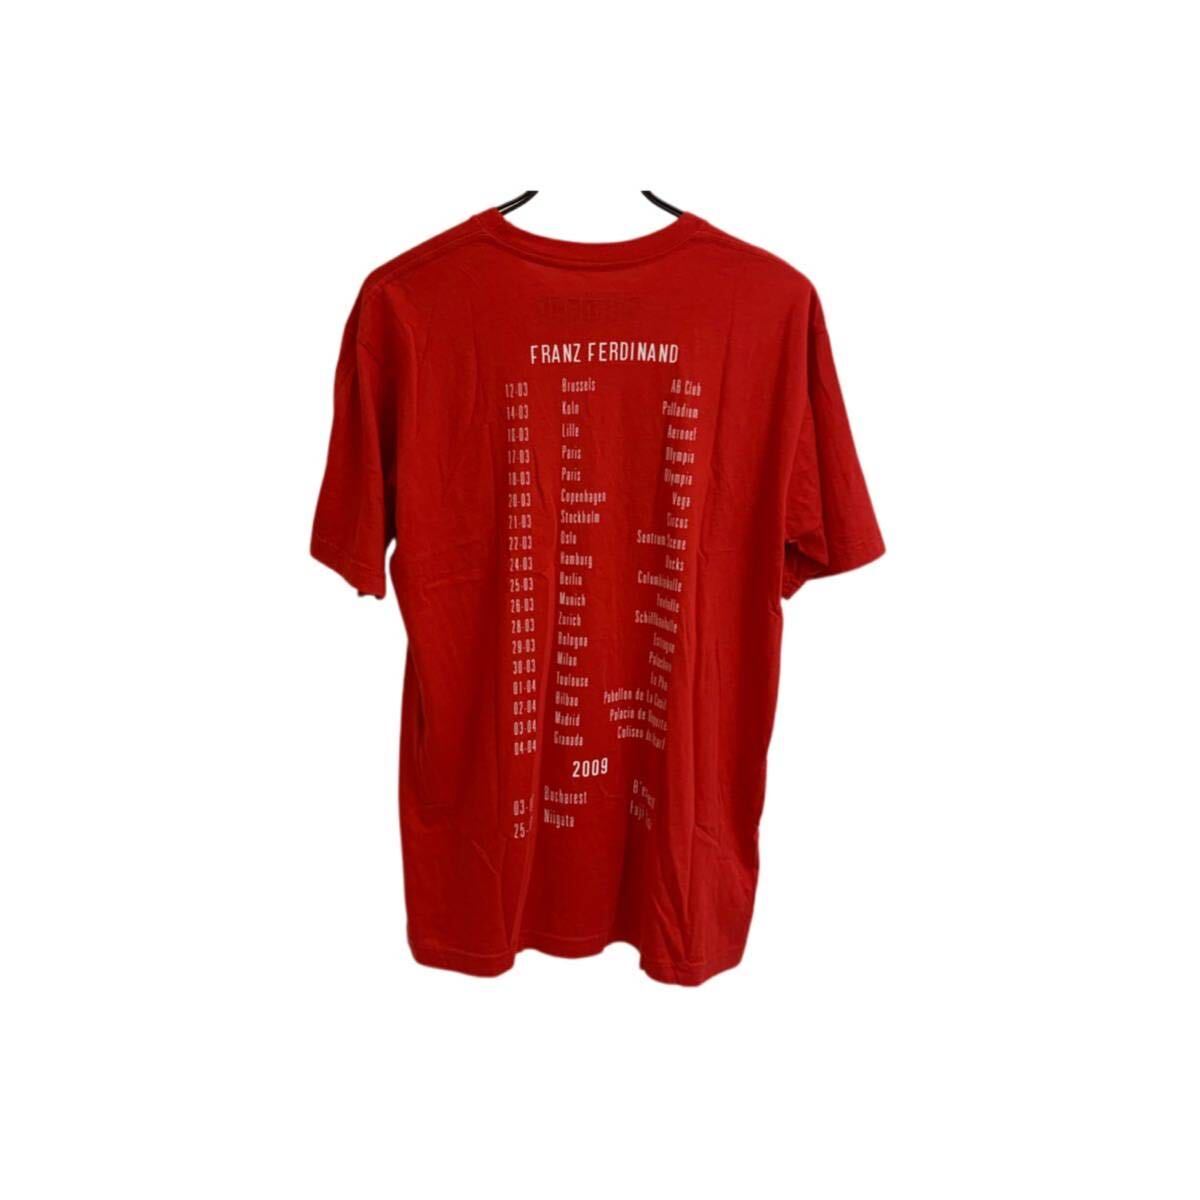 Franz Ferdinand フランツフェルディナンド 2008-09s ワールドツアーTシャツ バンドTシャツ ヴィンテージTシャツ USA製 RED M アーカイブ_画像9